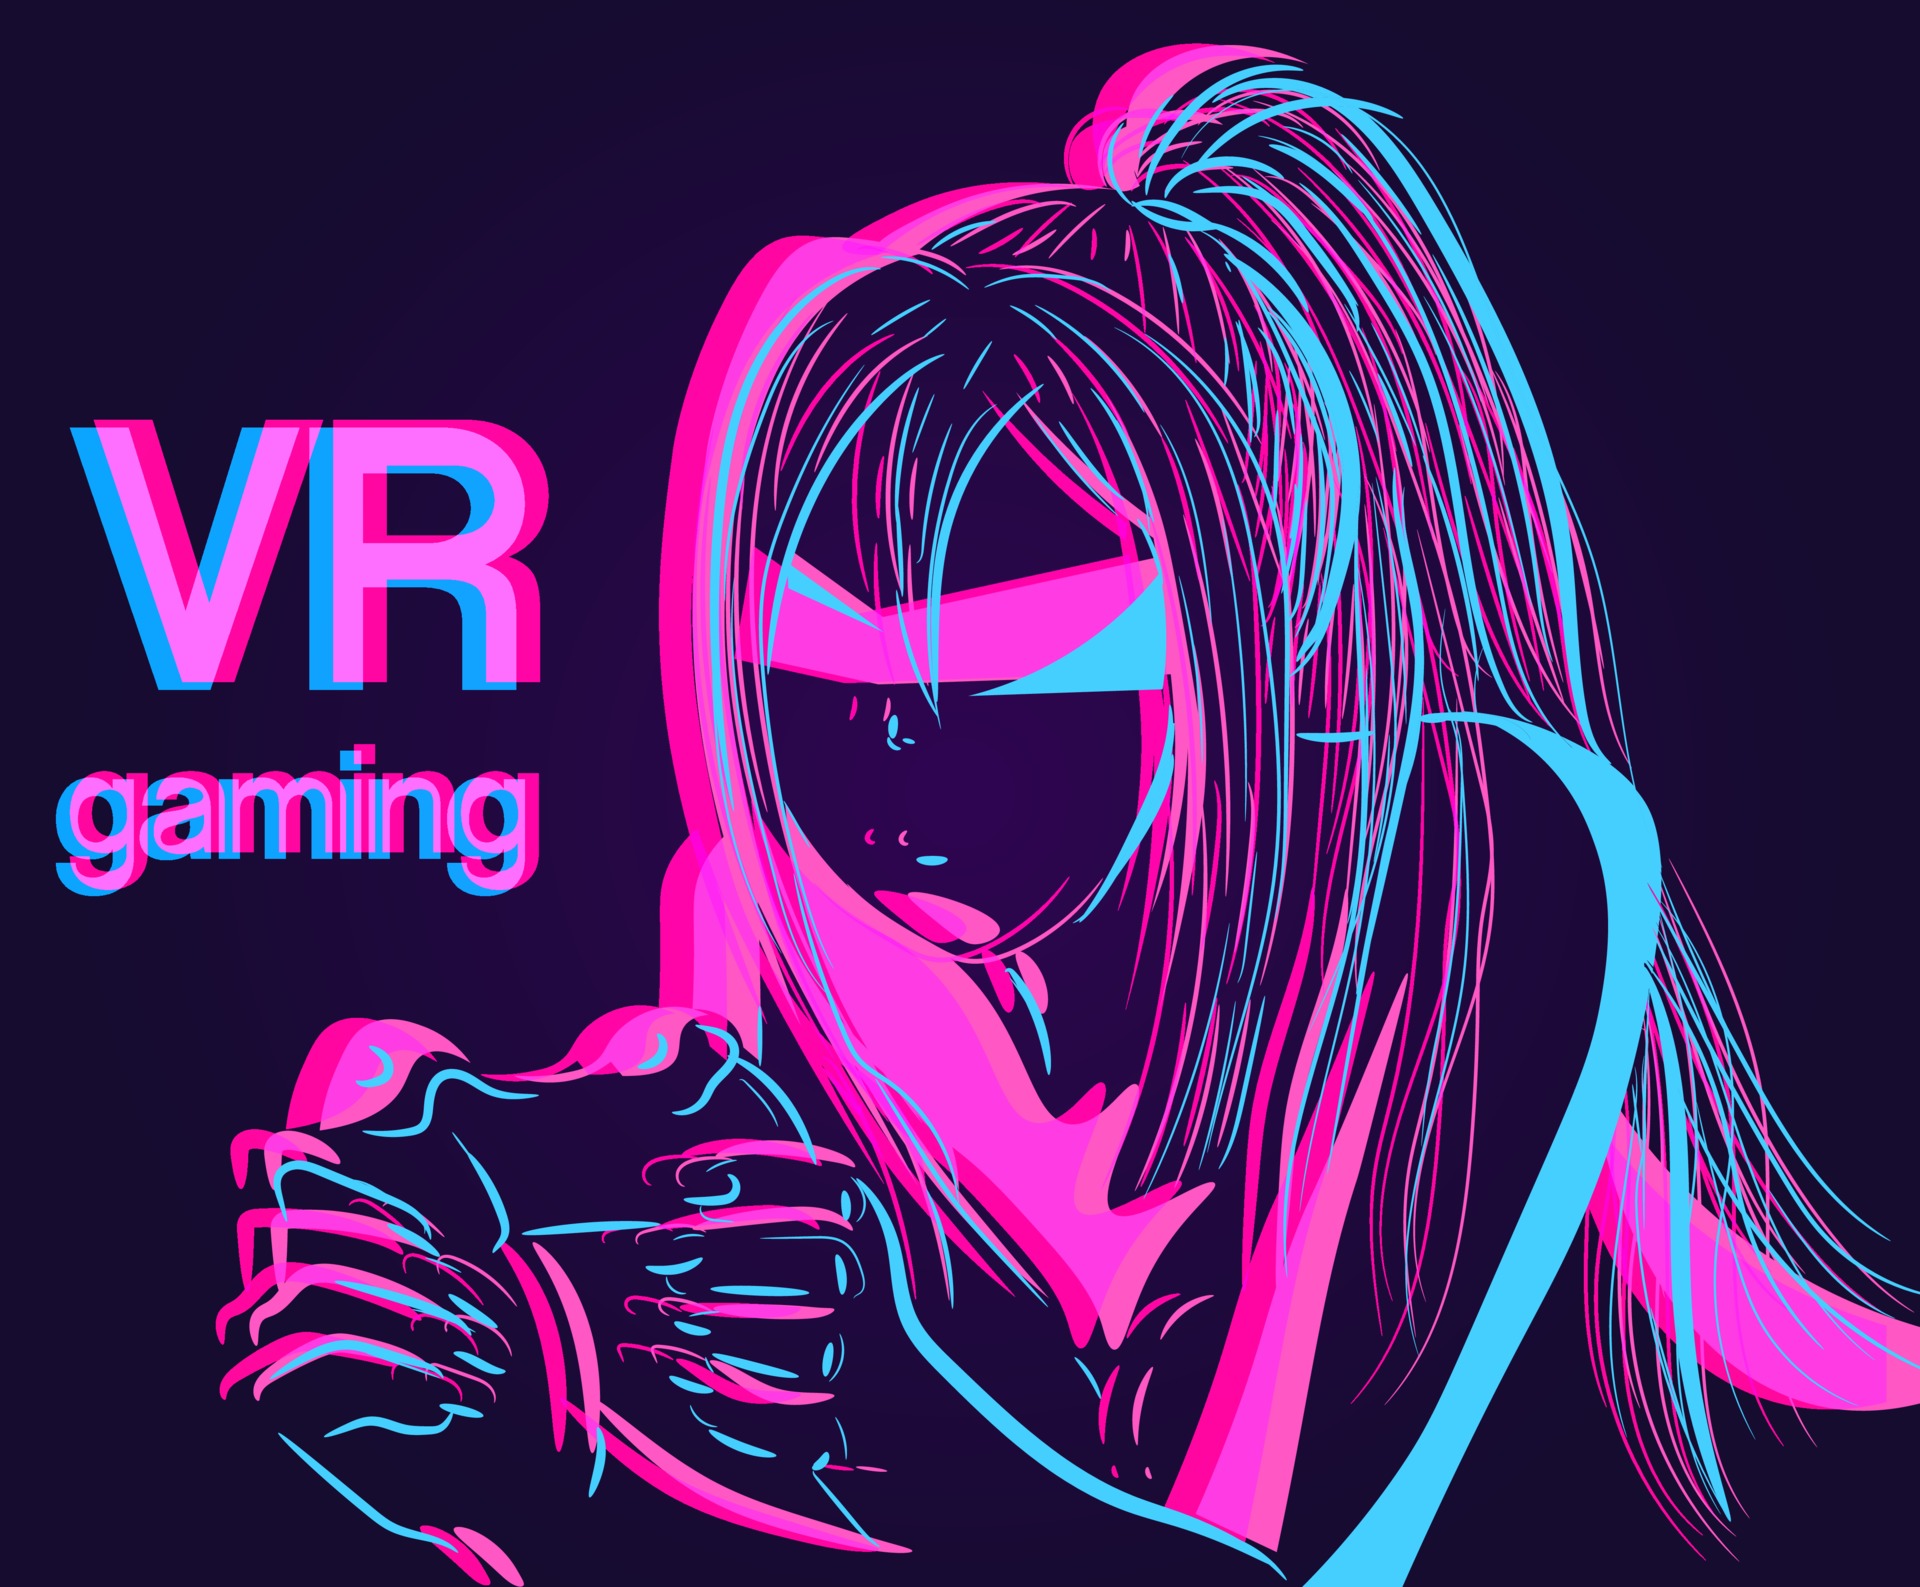 Menina animada usando óculos vr desfrutando de jogo online com cubos  virtuais neon brilhantes neon